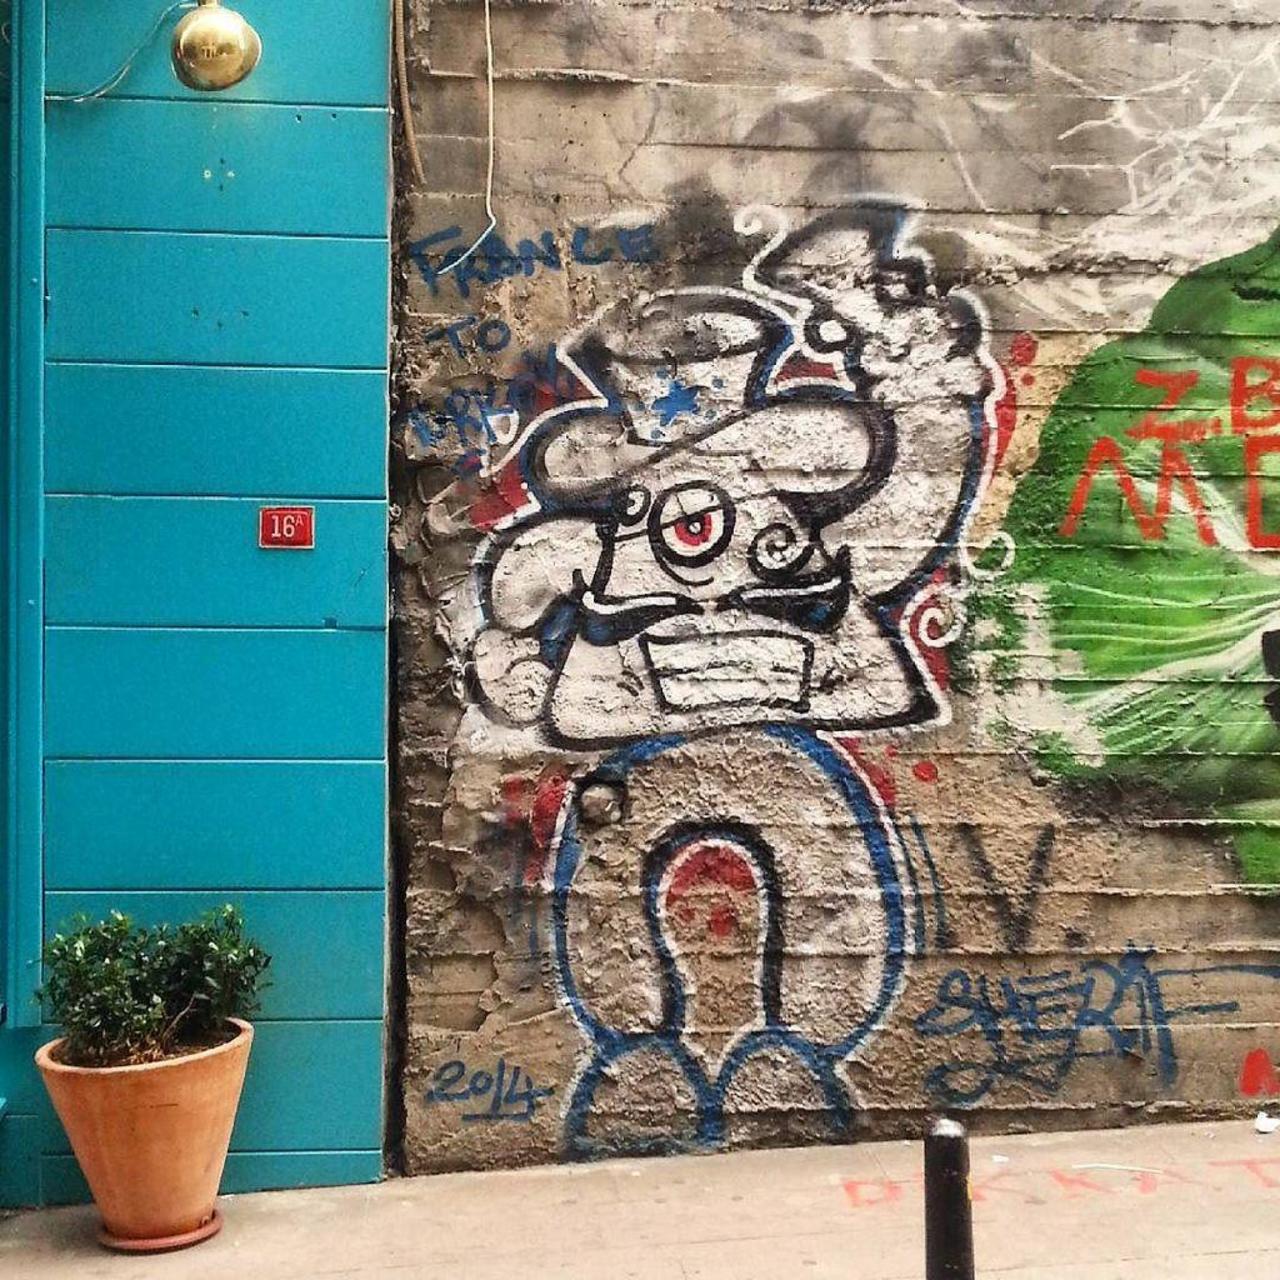 #streetart #graffiti #publicart #urbanart #sokaksanatı #streetartistanbul #istanbulstreetart #graffitiart by wallen… http://t.co/Xhrzu4FkKK